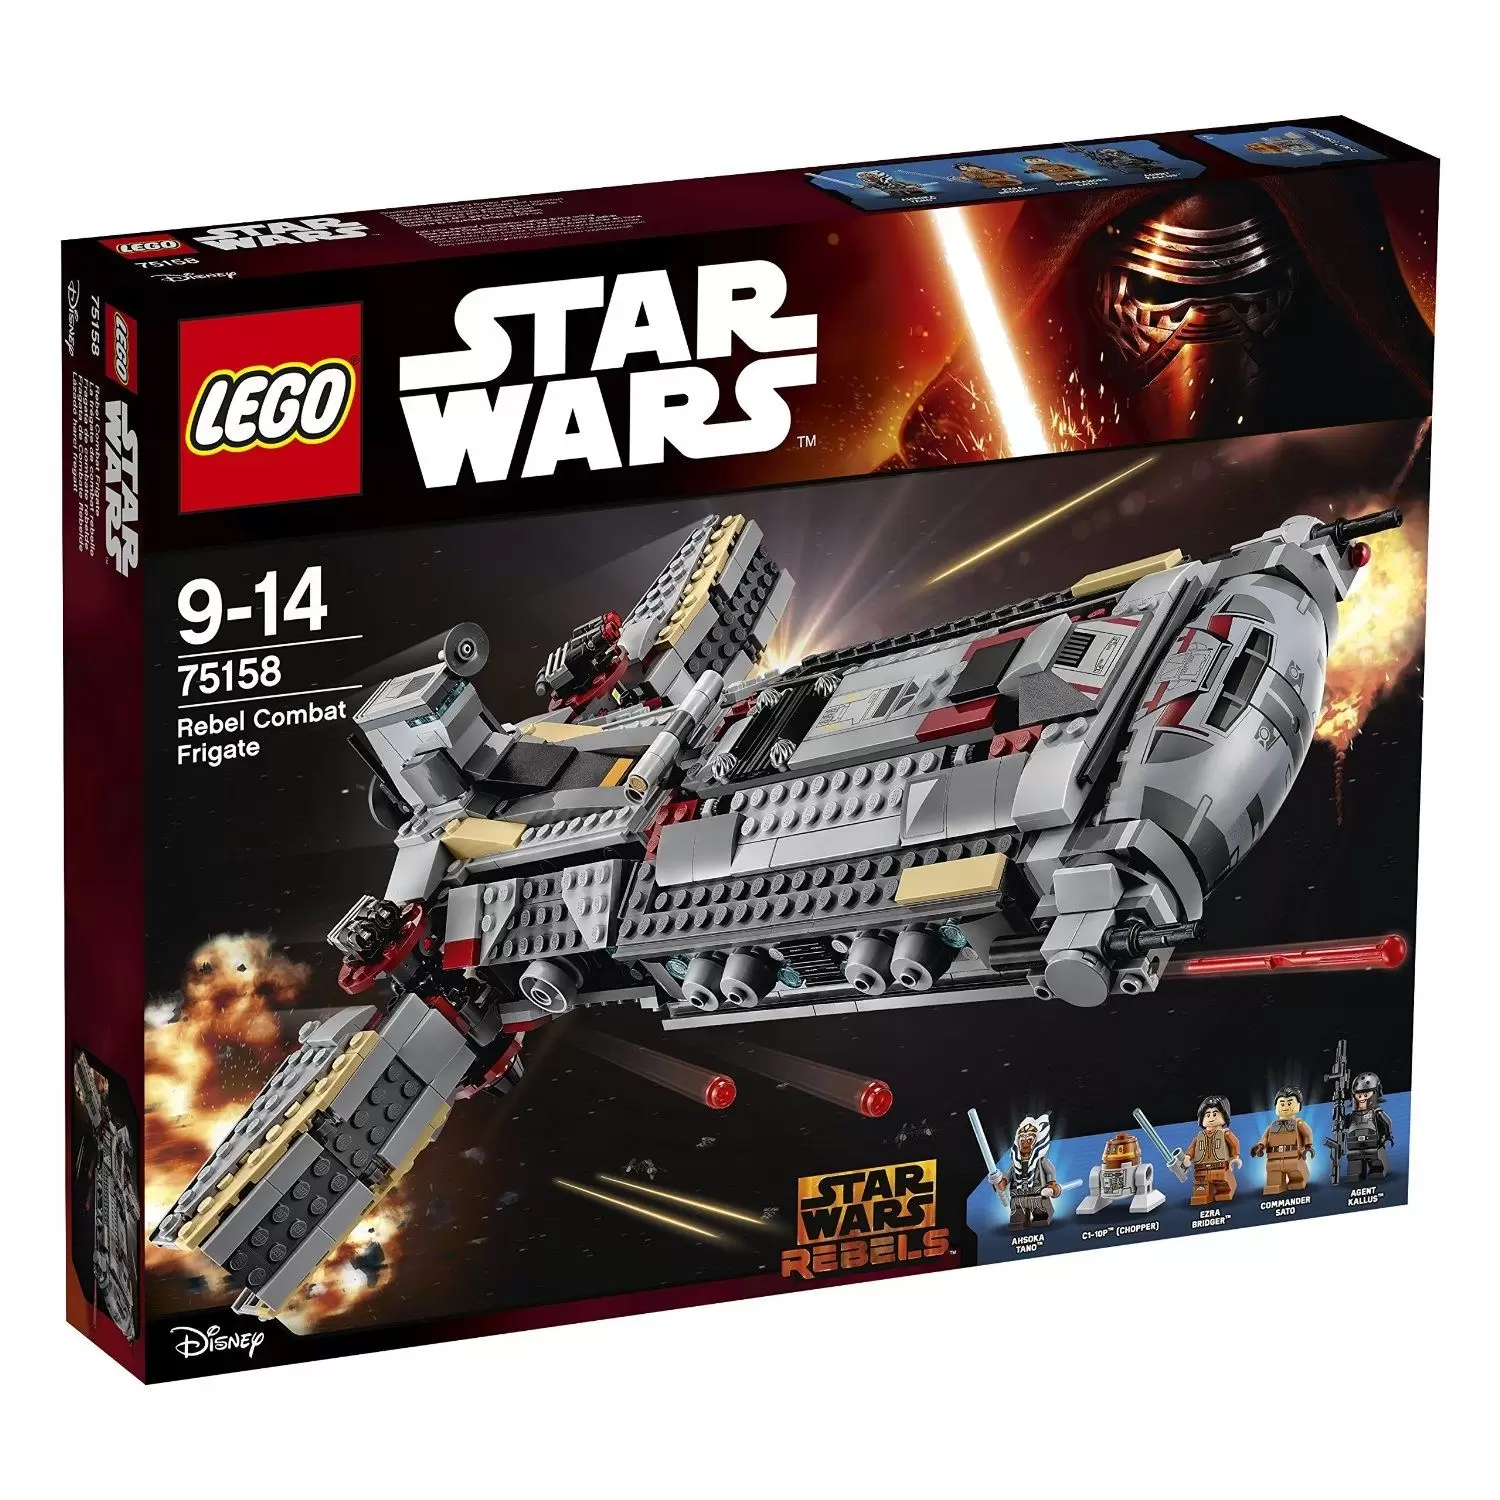 LEGO Star Wars - Rebel Combat Frigate